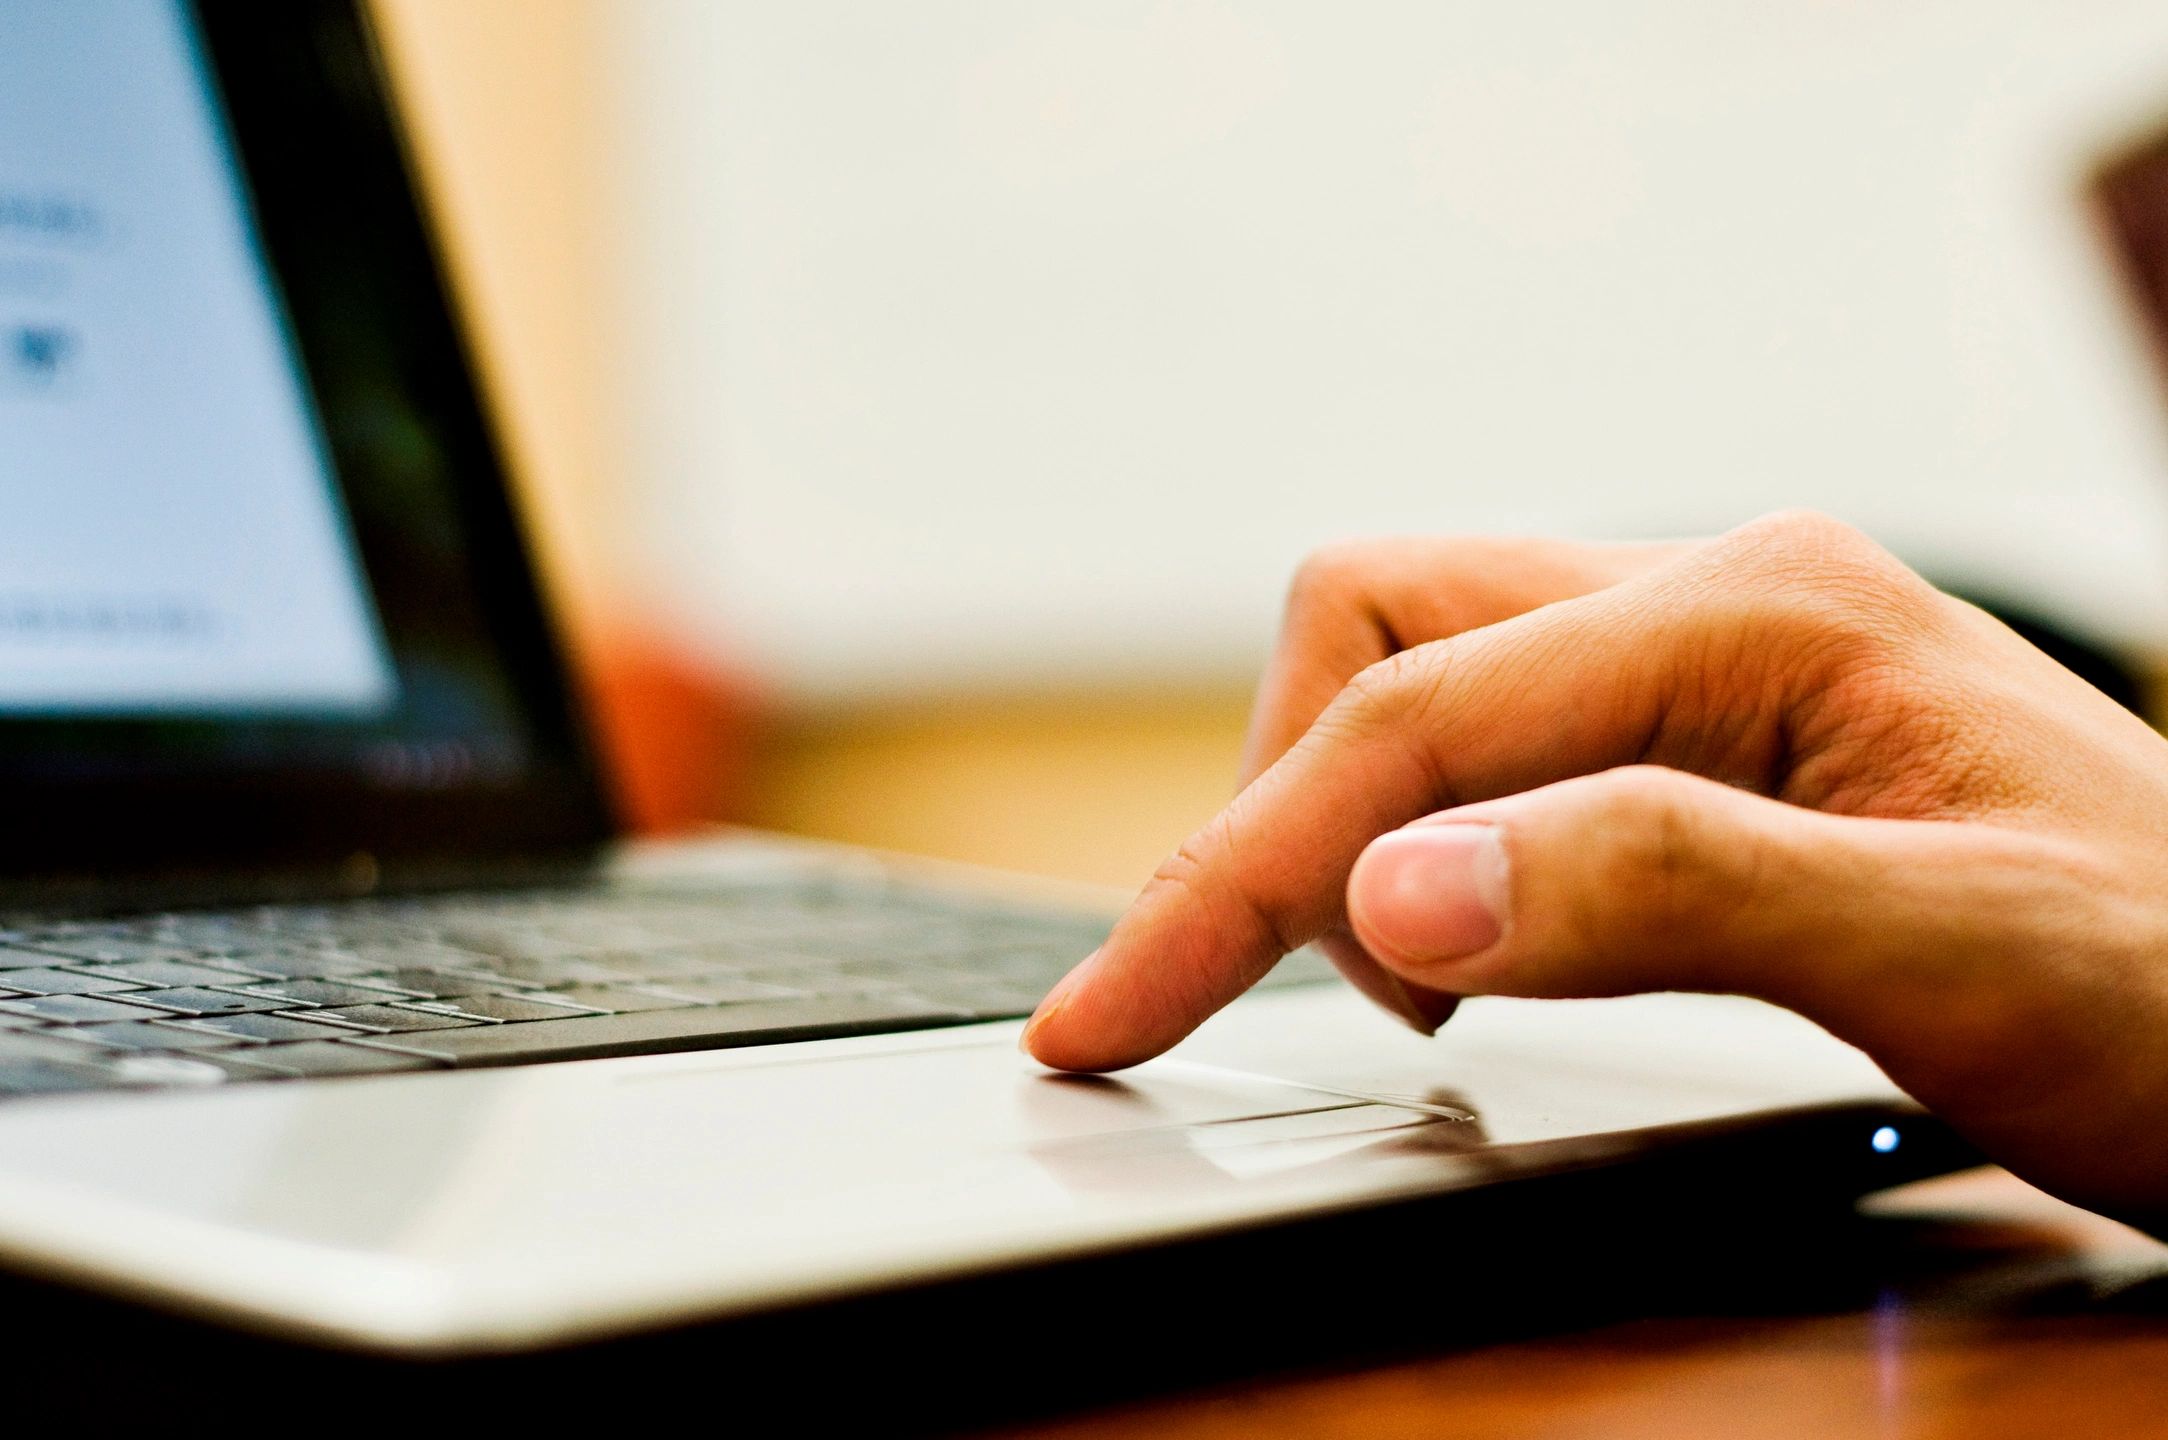 Online education, computer, finger, hand